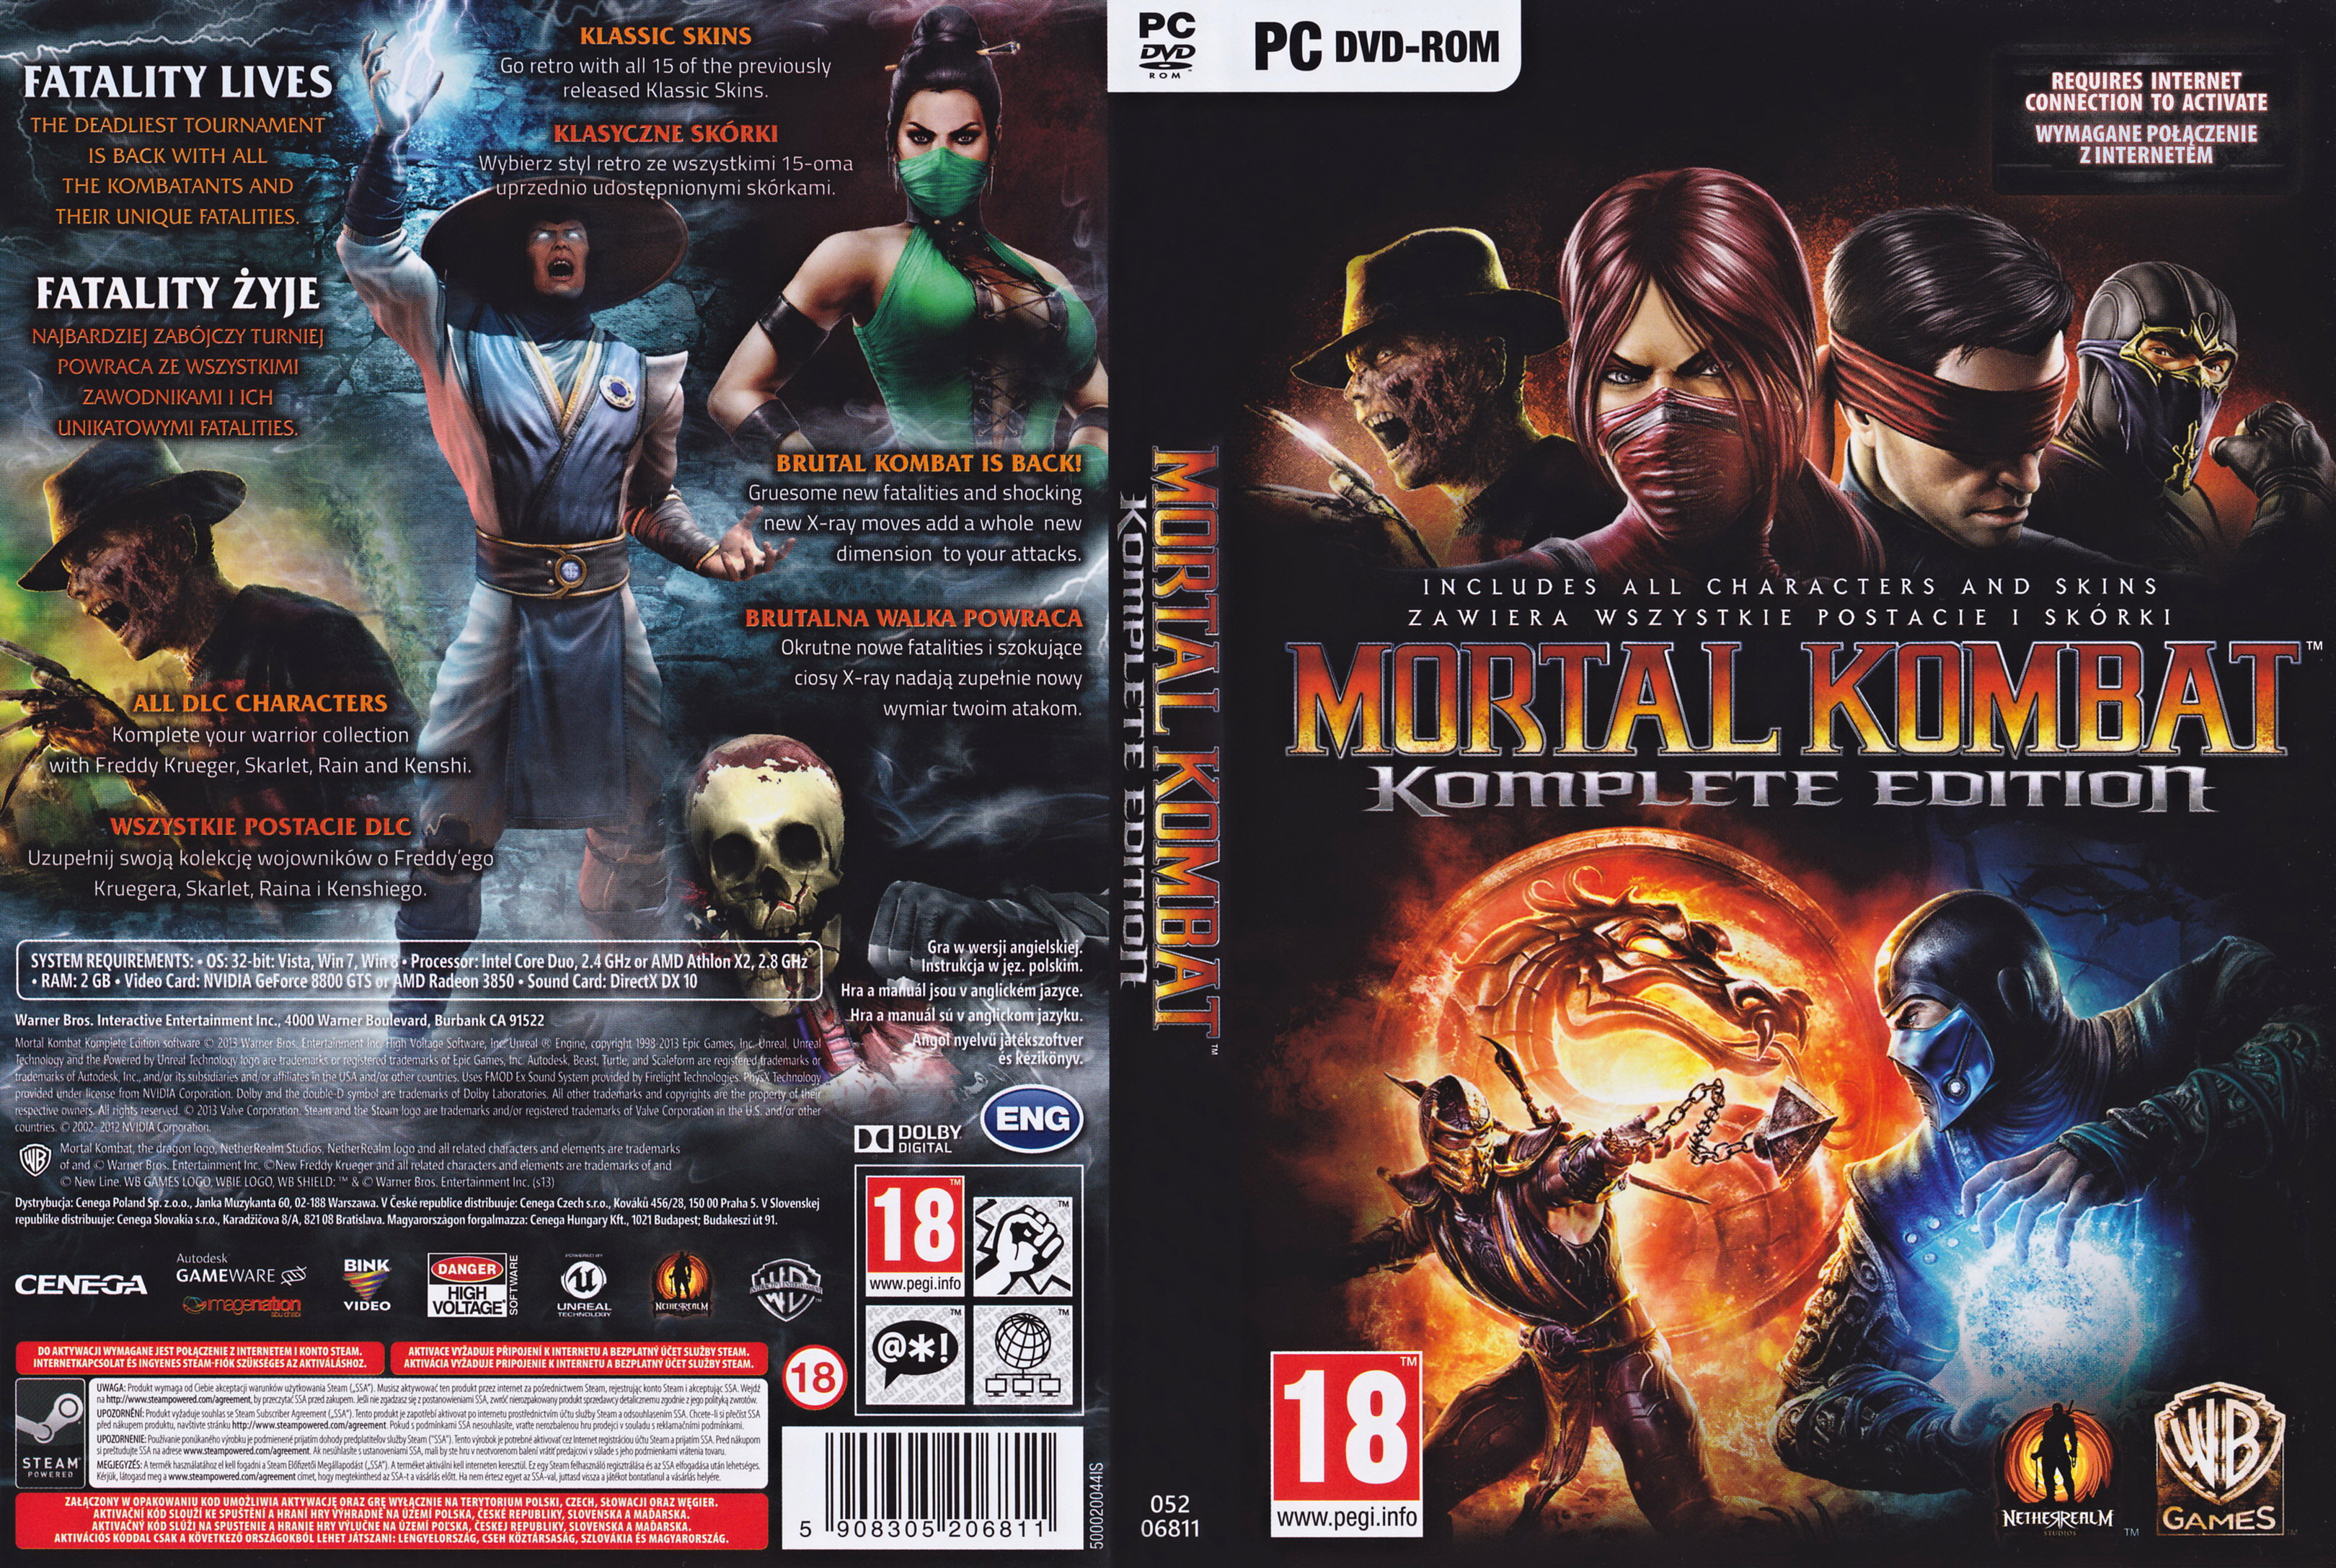 Мортал комбат 11 на компьютере. MK Komplete Edition Xbox 360. Диск Xbox 360 Mortal Kombat. Mortal Kombat 9 ps3 обложка. Mortal Kombat 9 Komplete Edition Xbox 360.